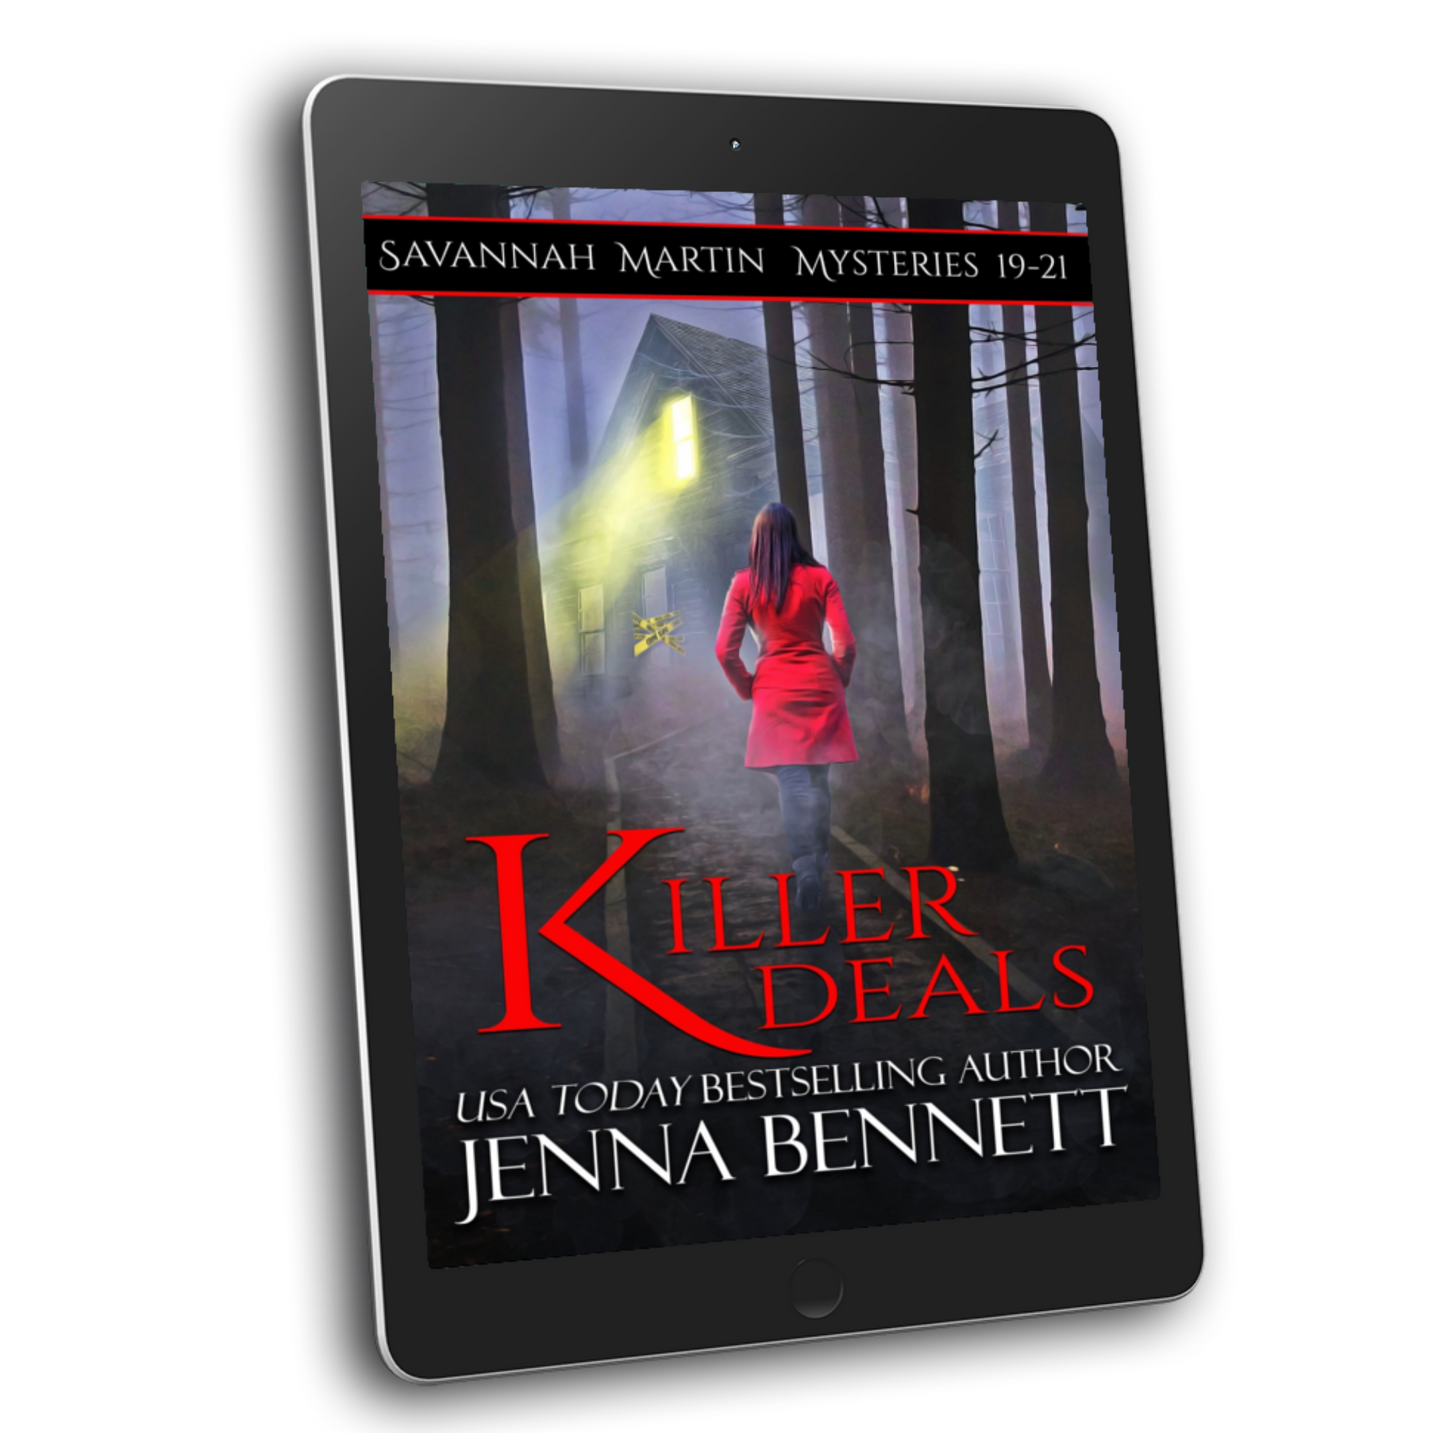 Killer Deals - Savannah Martin Mysteries 19-21